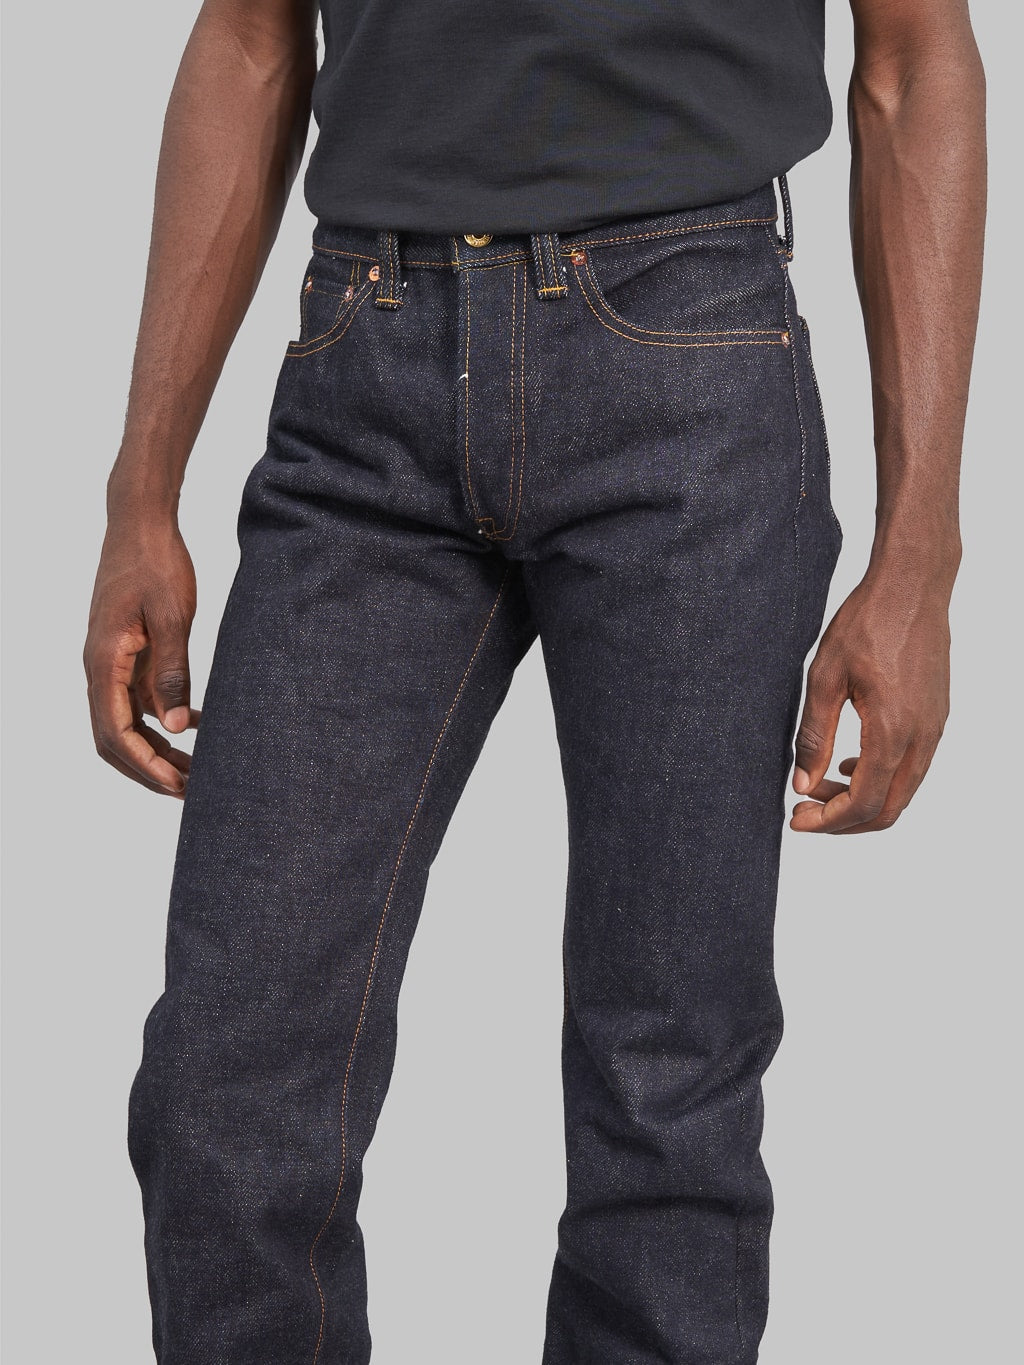 samurai jeans s710xx 25oz 25th anniversary selvedge jeans mid rise